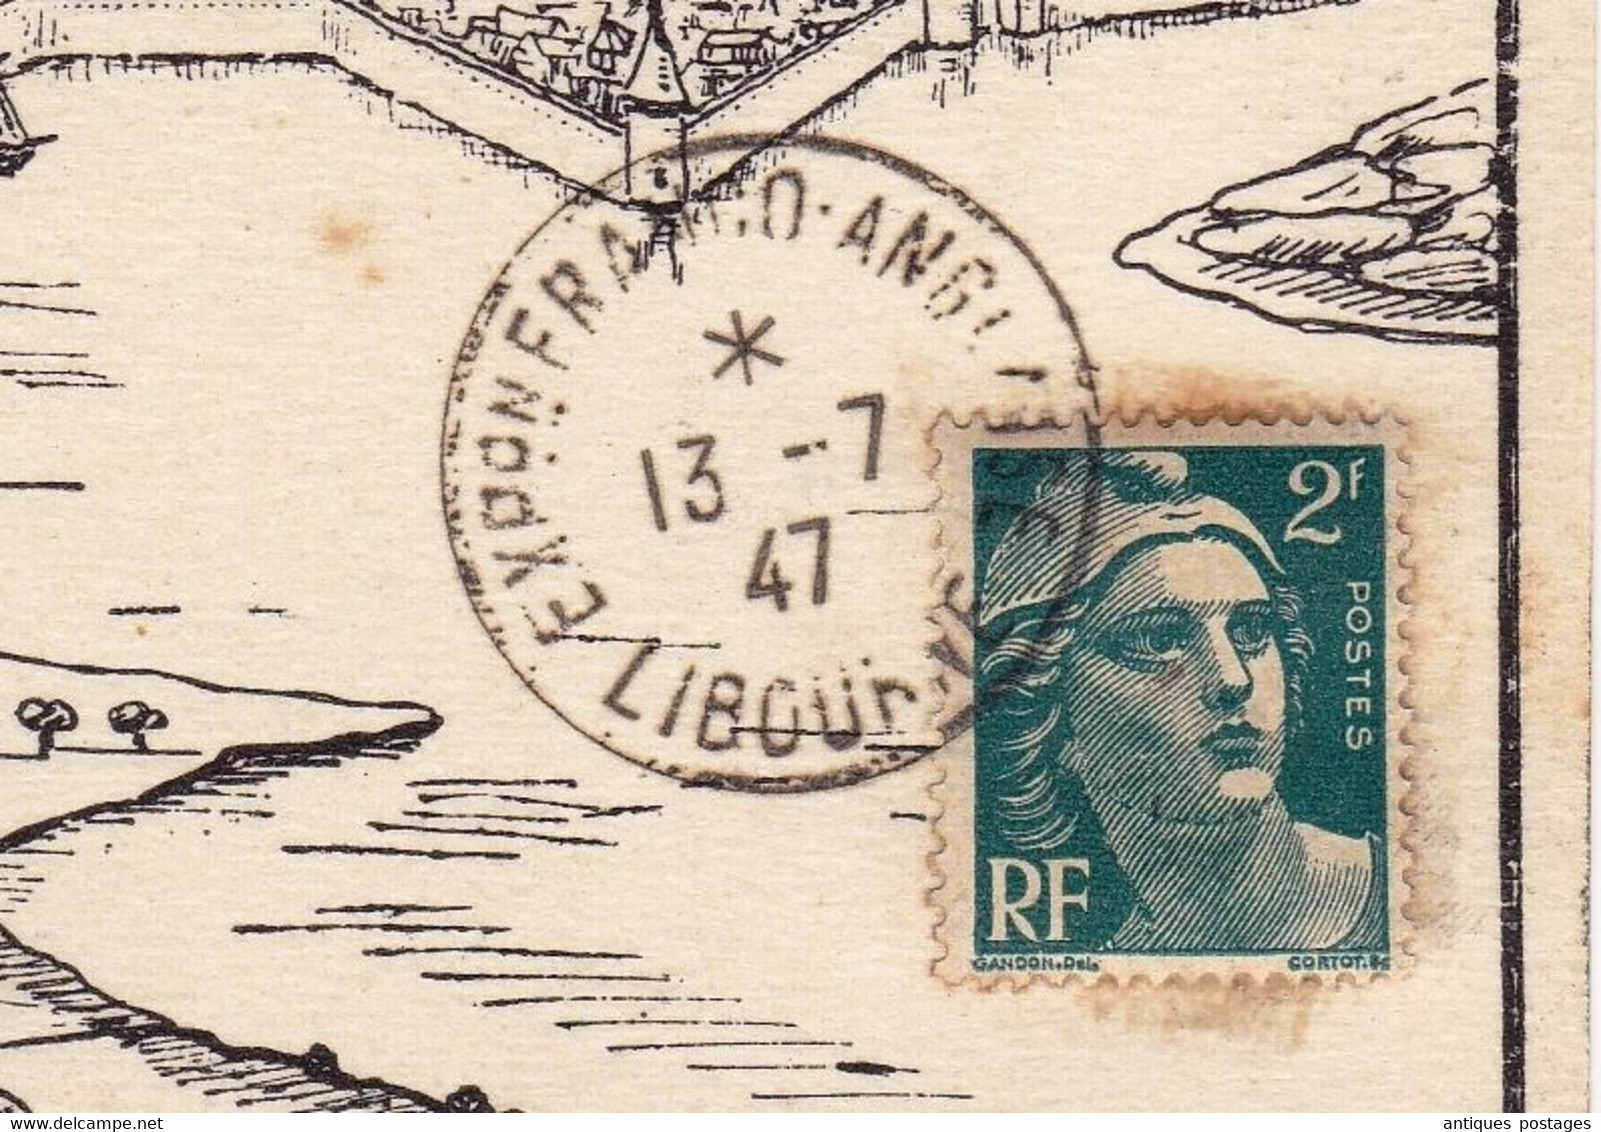 Carte Postale Libourne 1947 Gironde Marianne De Gandon 2 Francs Exposition Anglo Française A.C.T.O. - 1945-54 Marianne (Gandon)